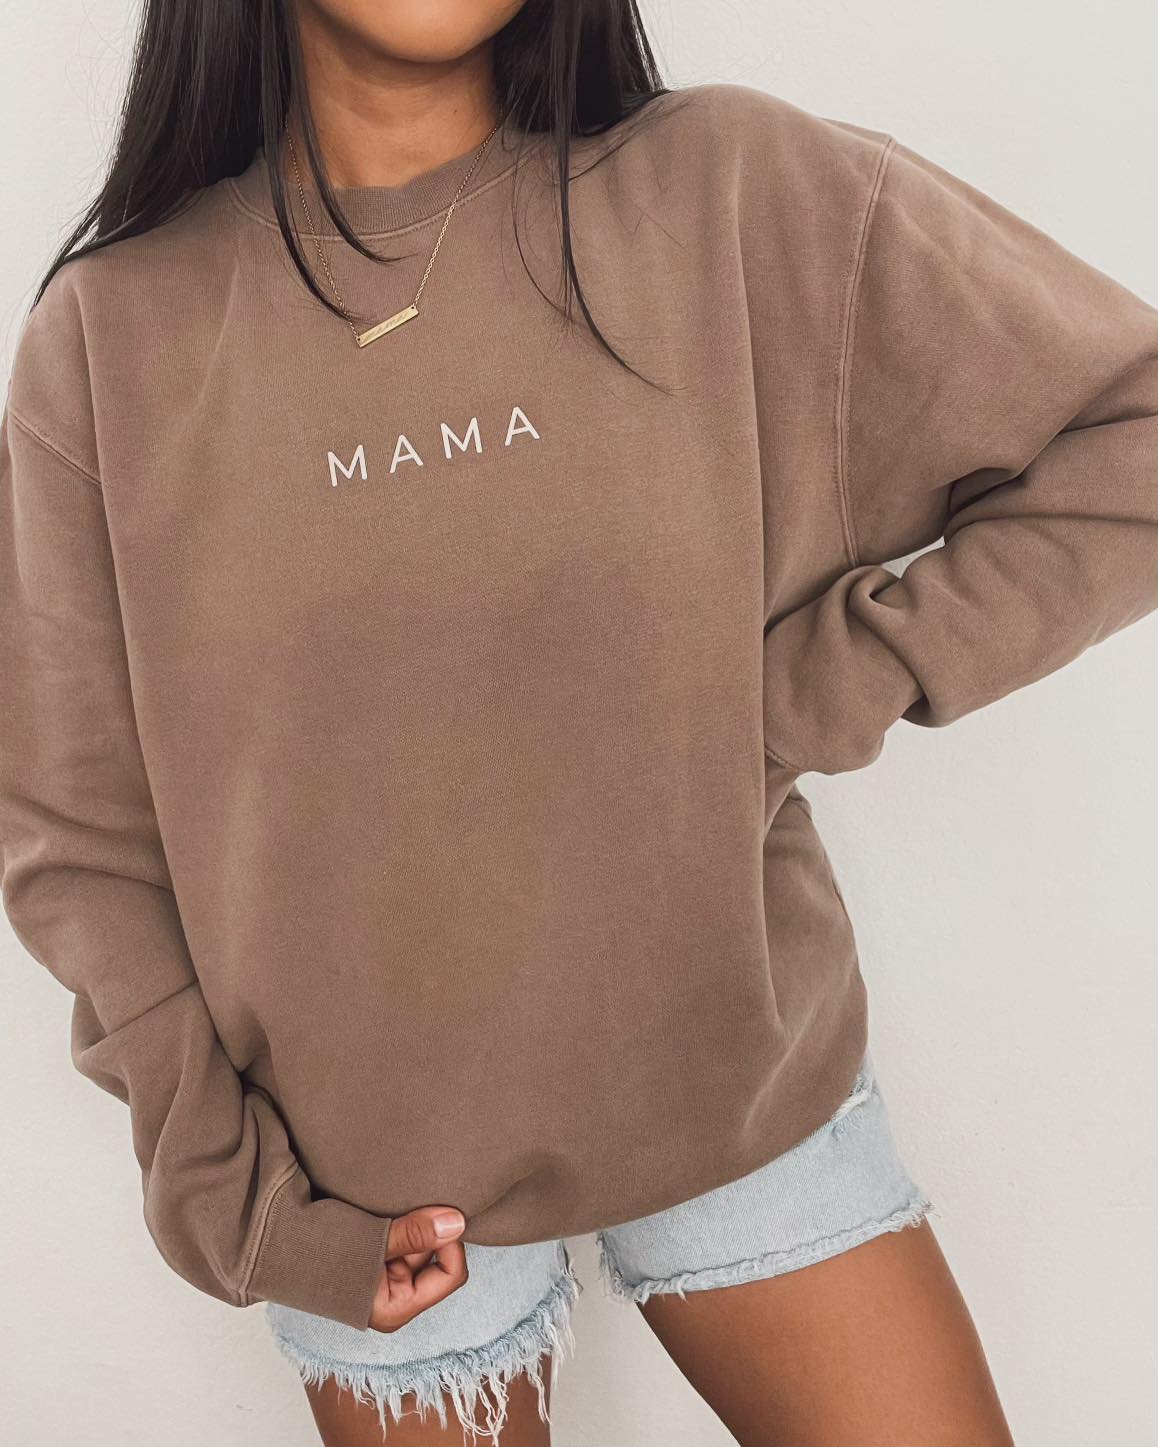 Mama (Tan Minimal) - Sweatshirt (Cocoa)